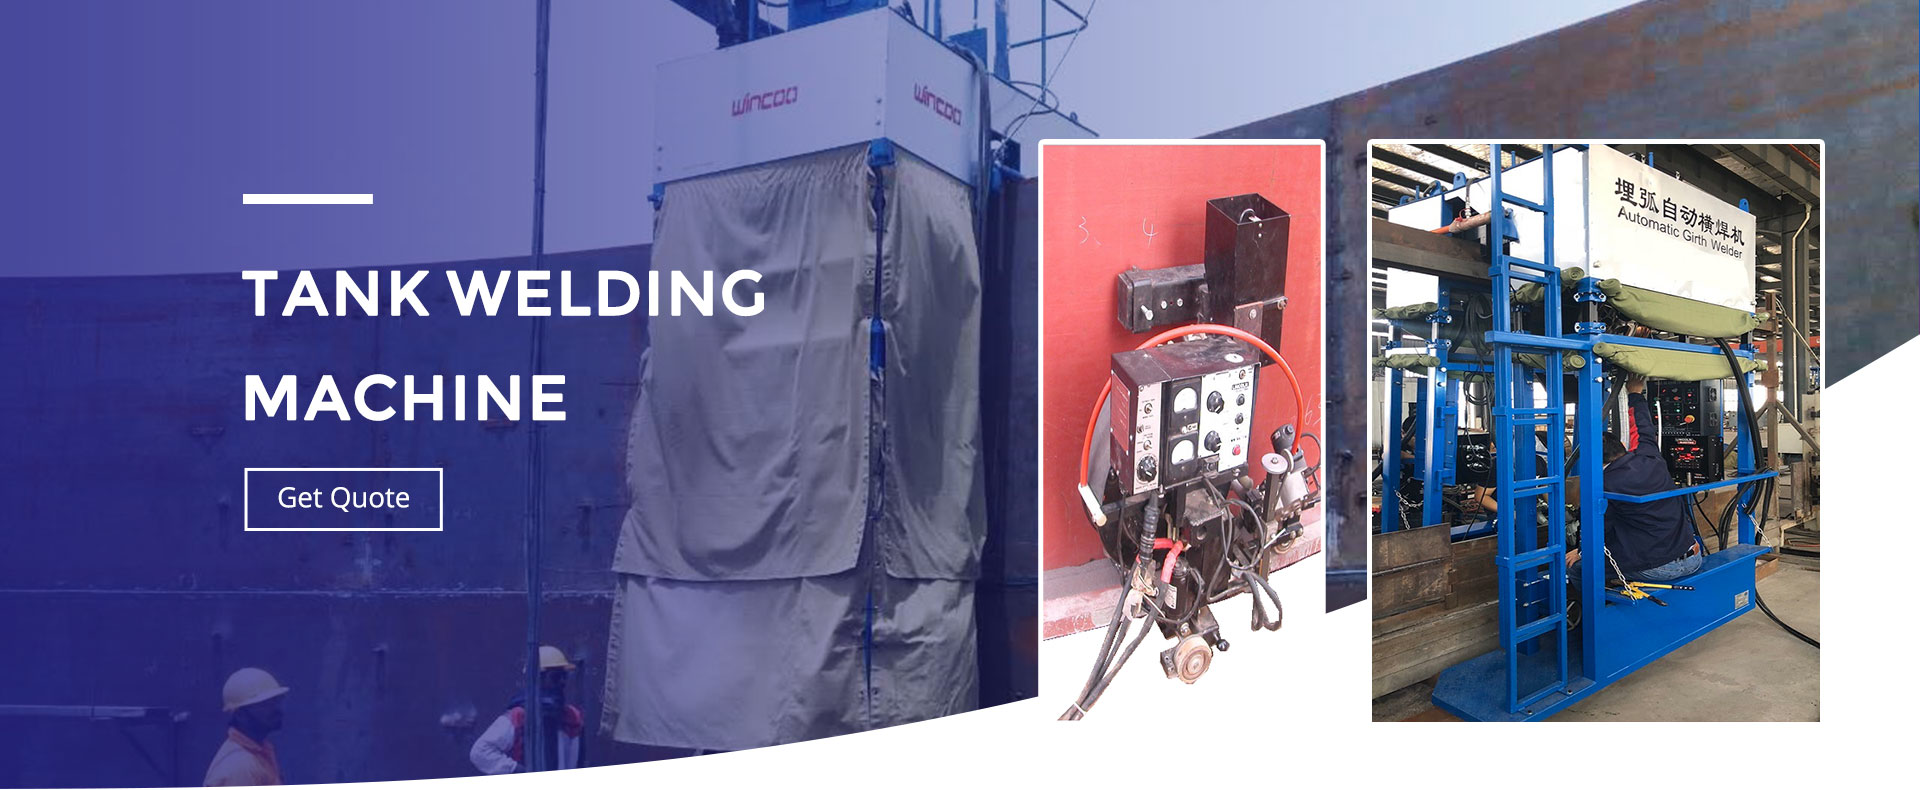 Advanced hydraulic lifting equipment